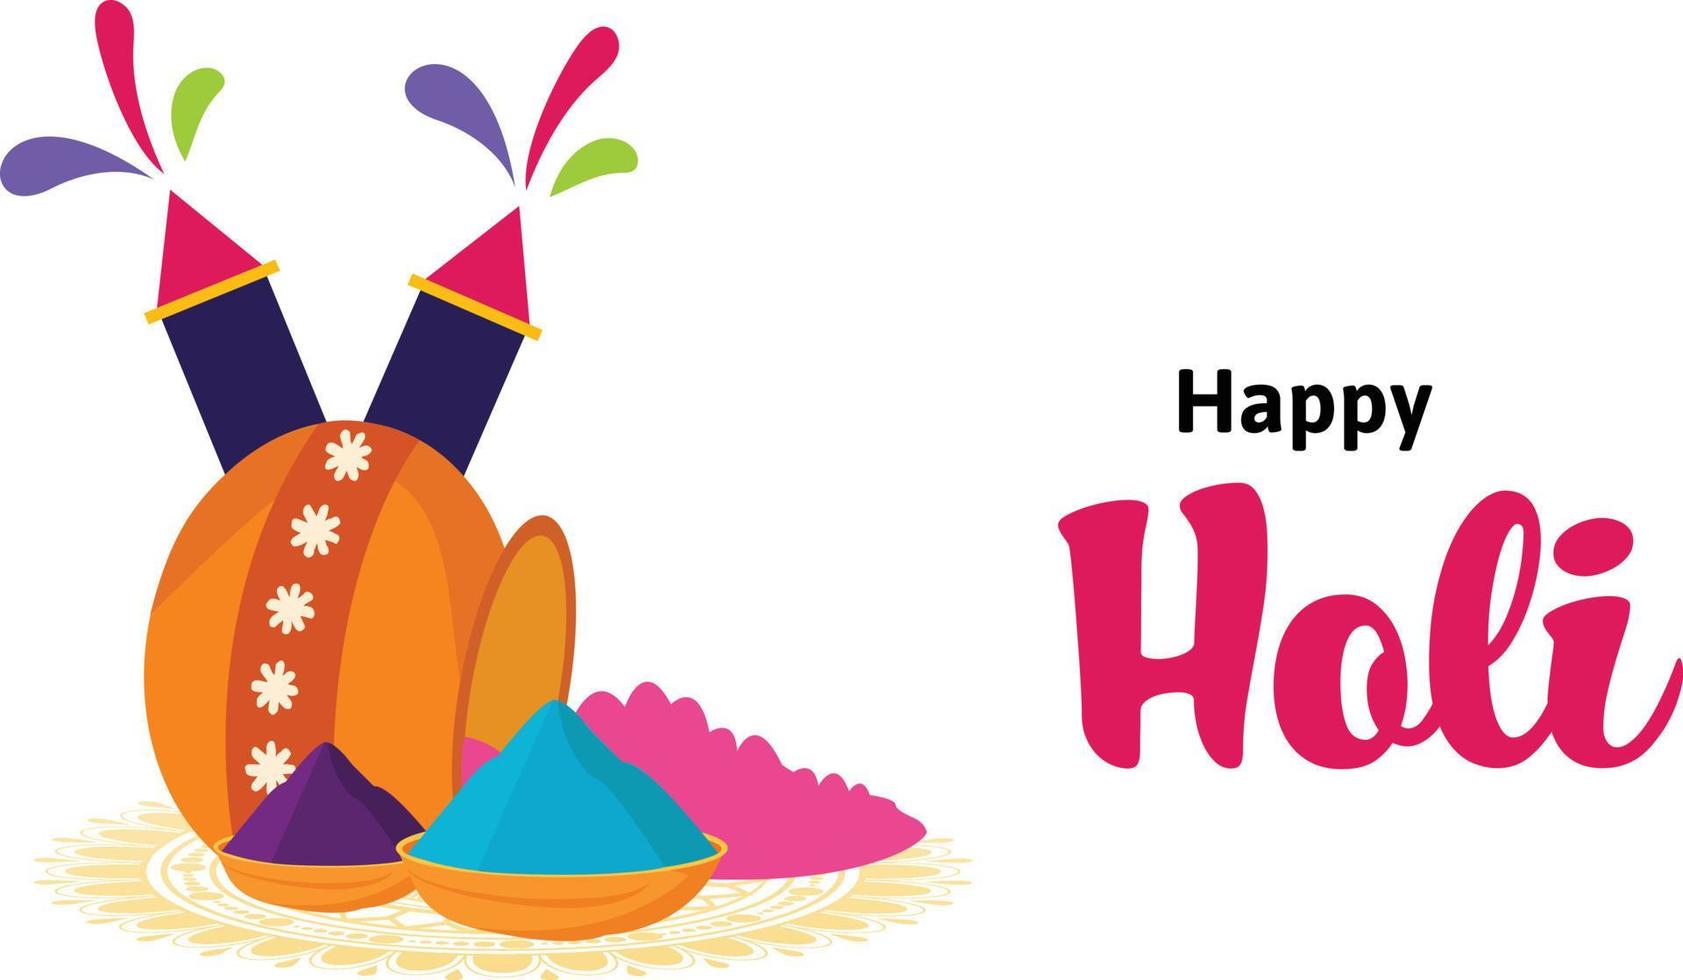 Happy Holi Festival Of Colors Indian Festival Celebration Vector Illustrations